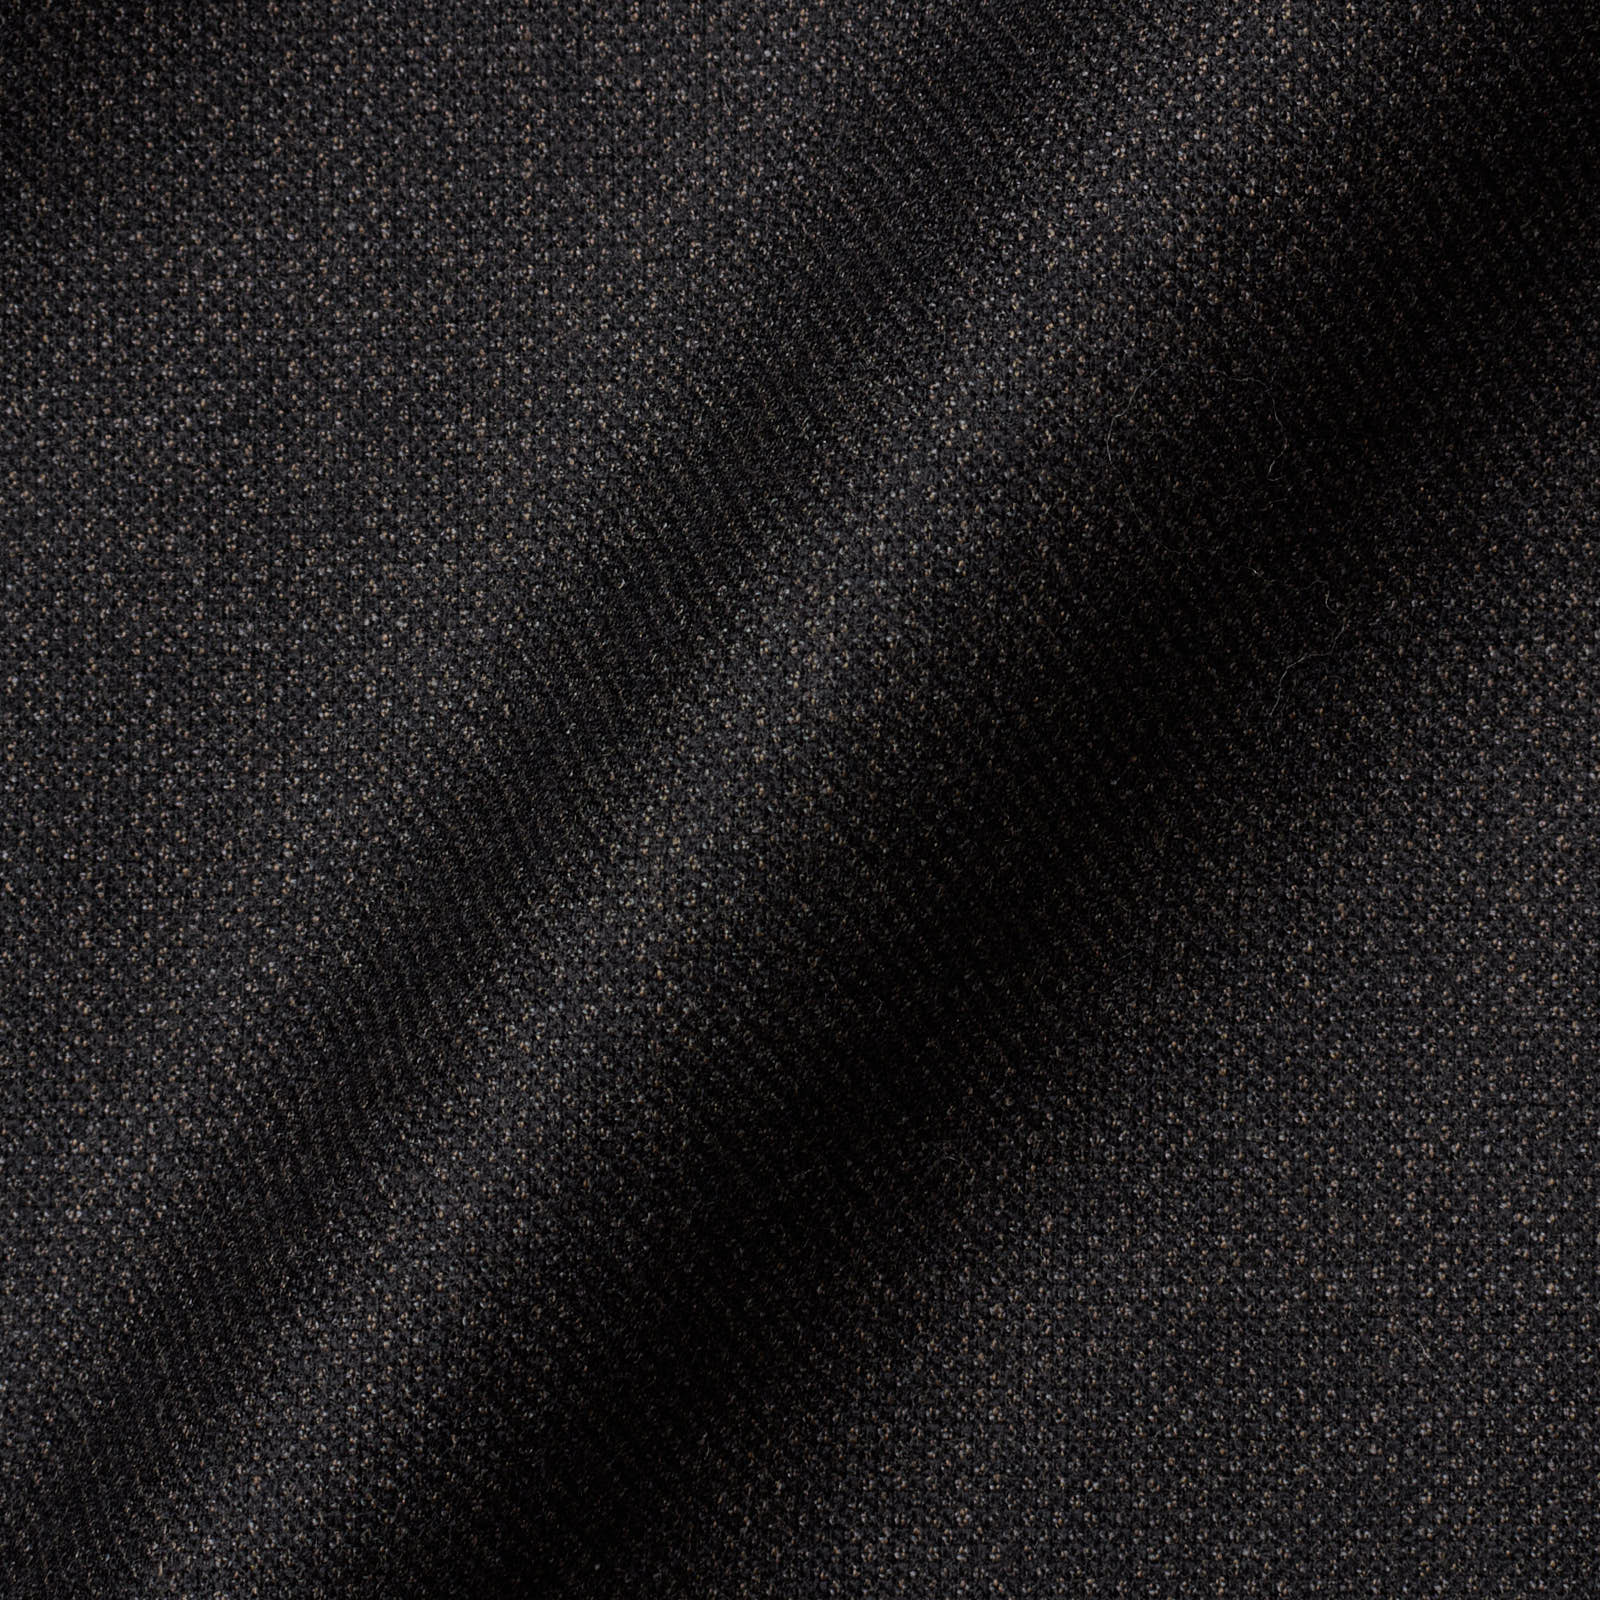 KITON Napoli Handmade Gray 14 Micron Super 180's Suit EU 56 NEW US 46